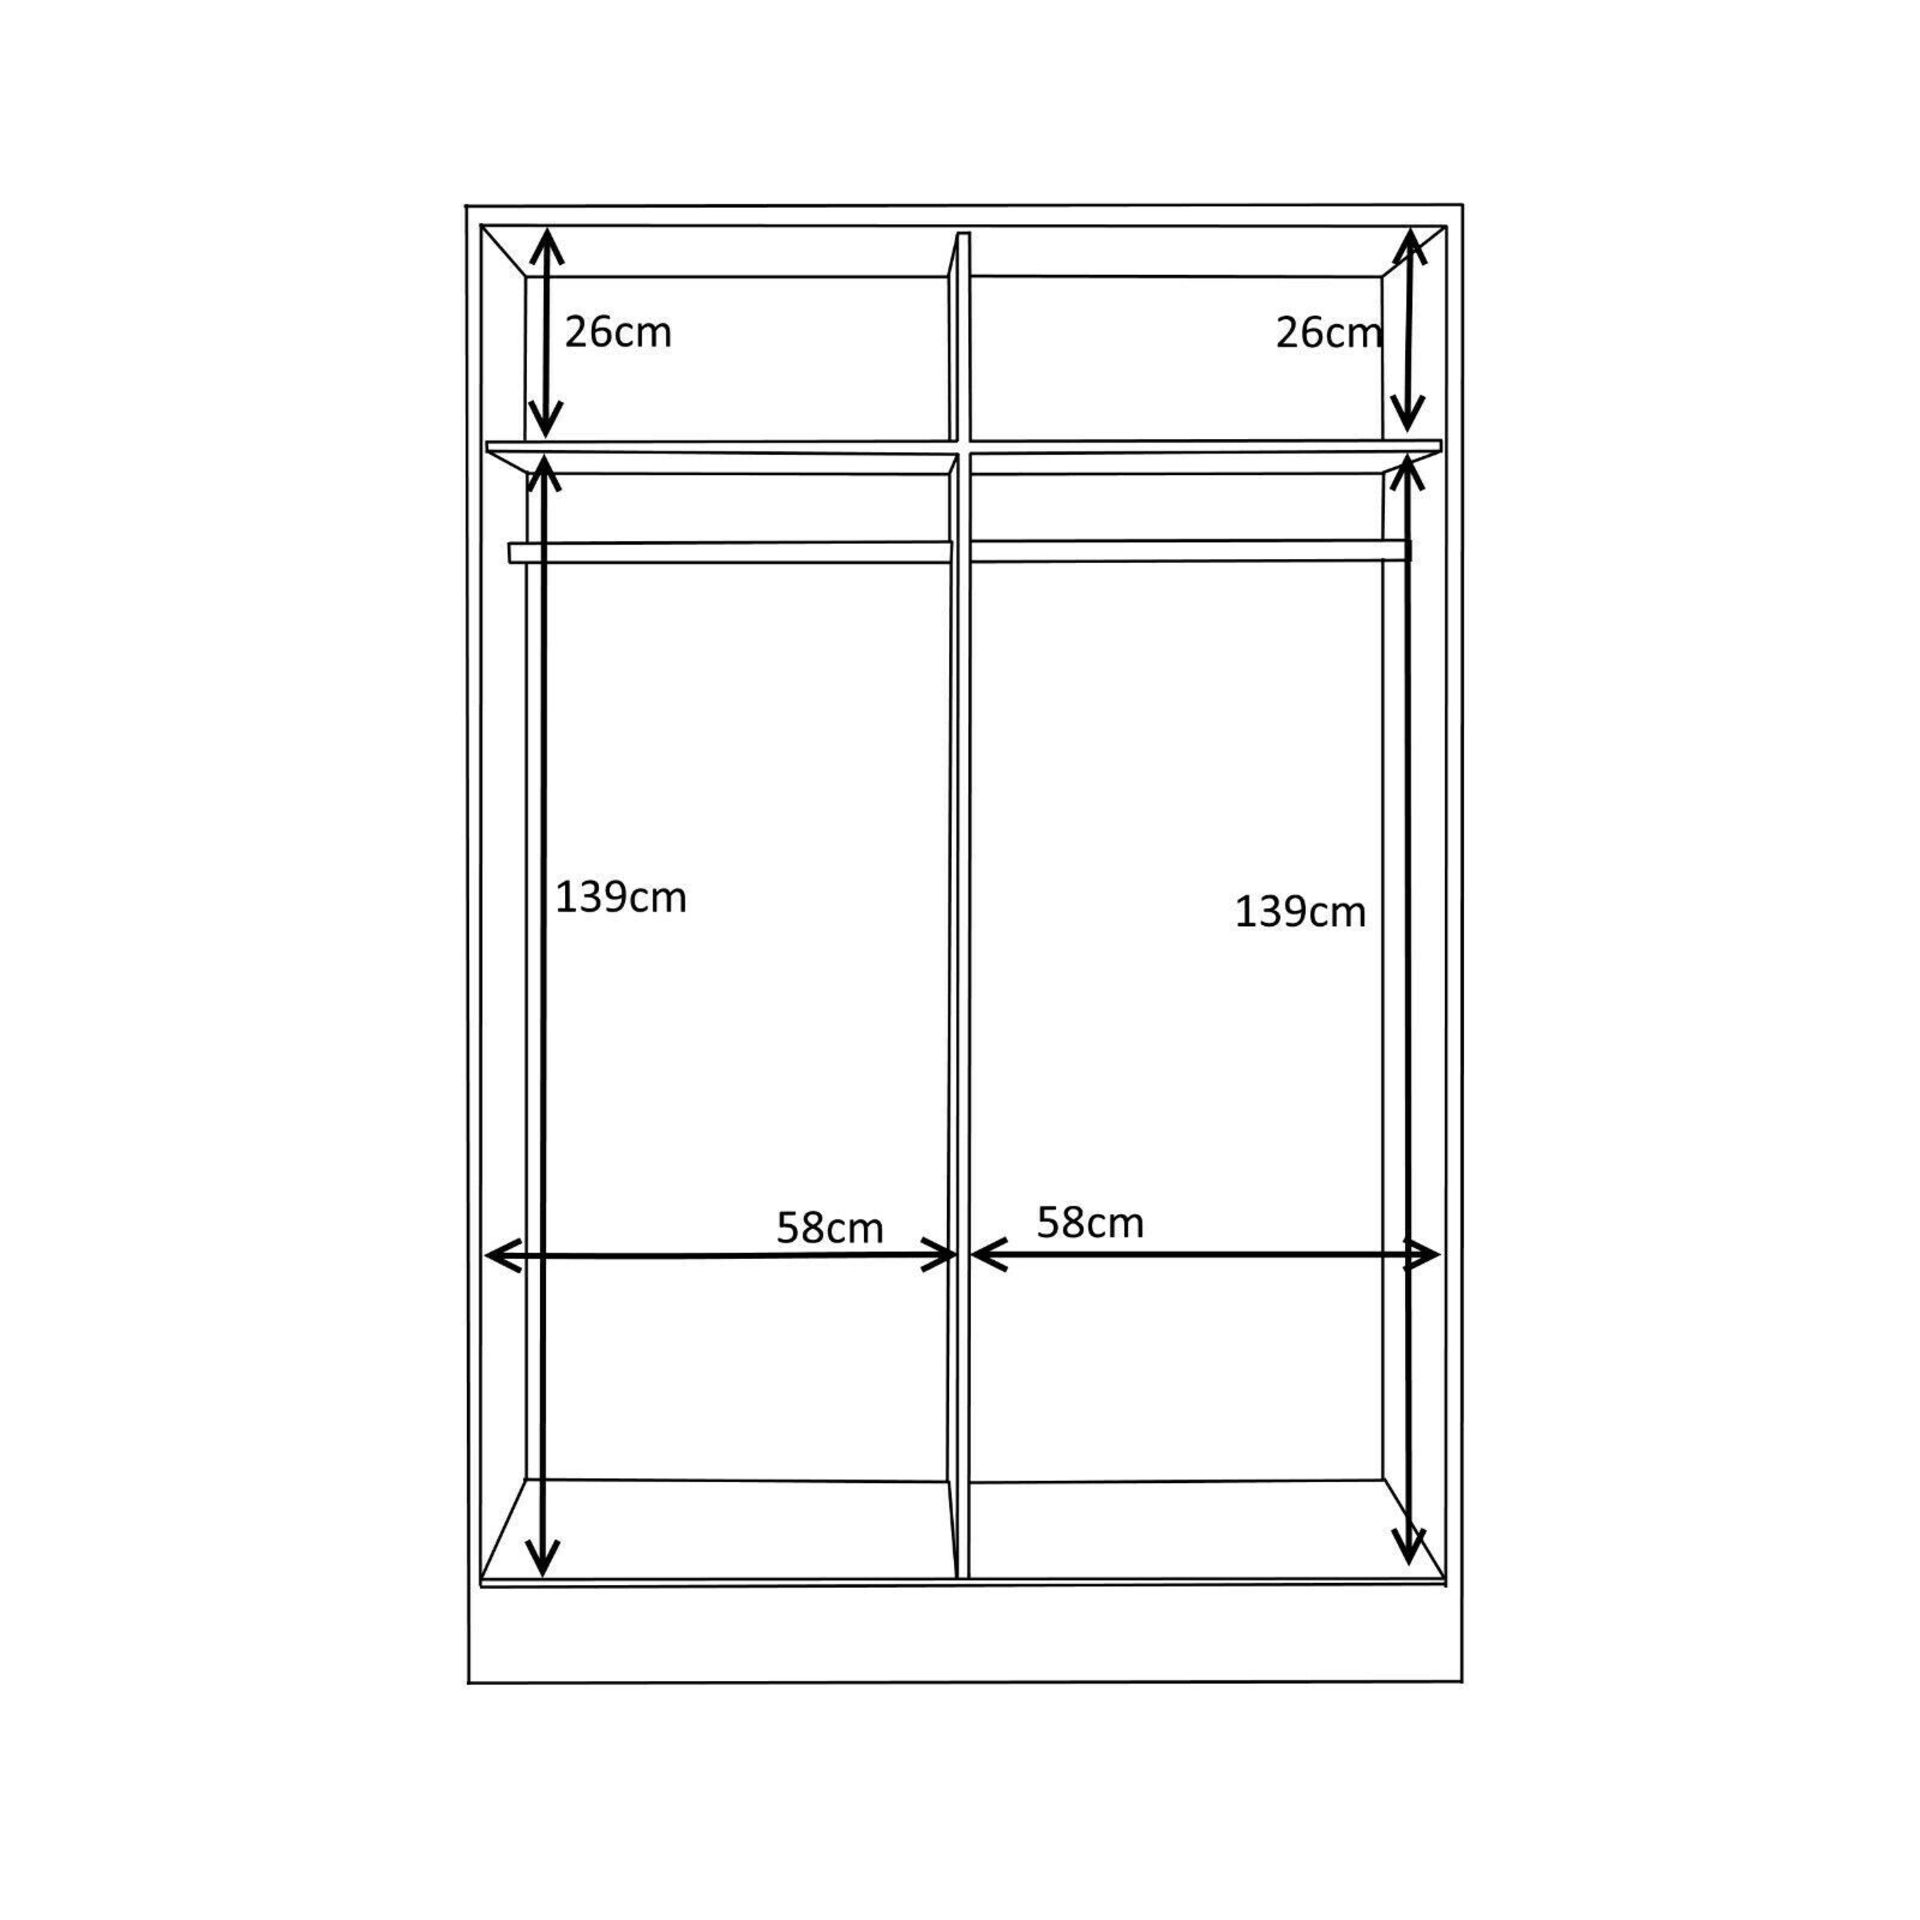 2 DOOR SLIDING WARDROBE XL HIGH GLOSS BEDROOM FURNITURE WHITE ON WHITE - Image 5 of 8